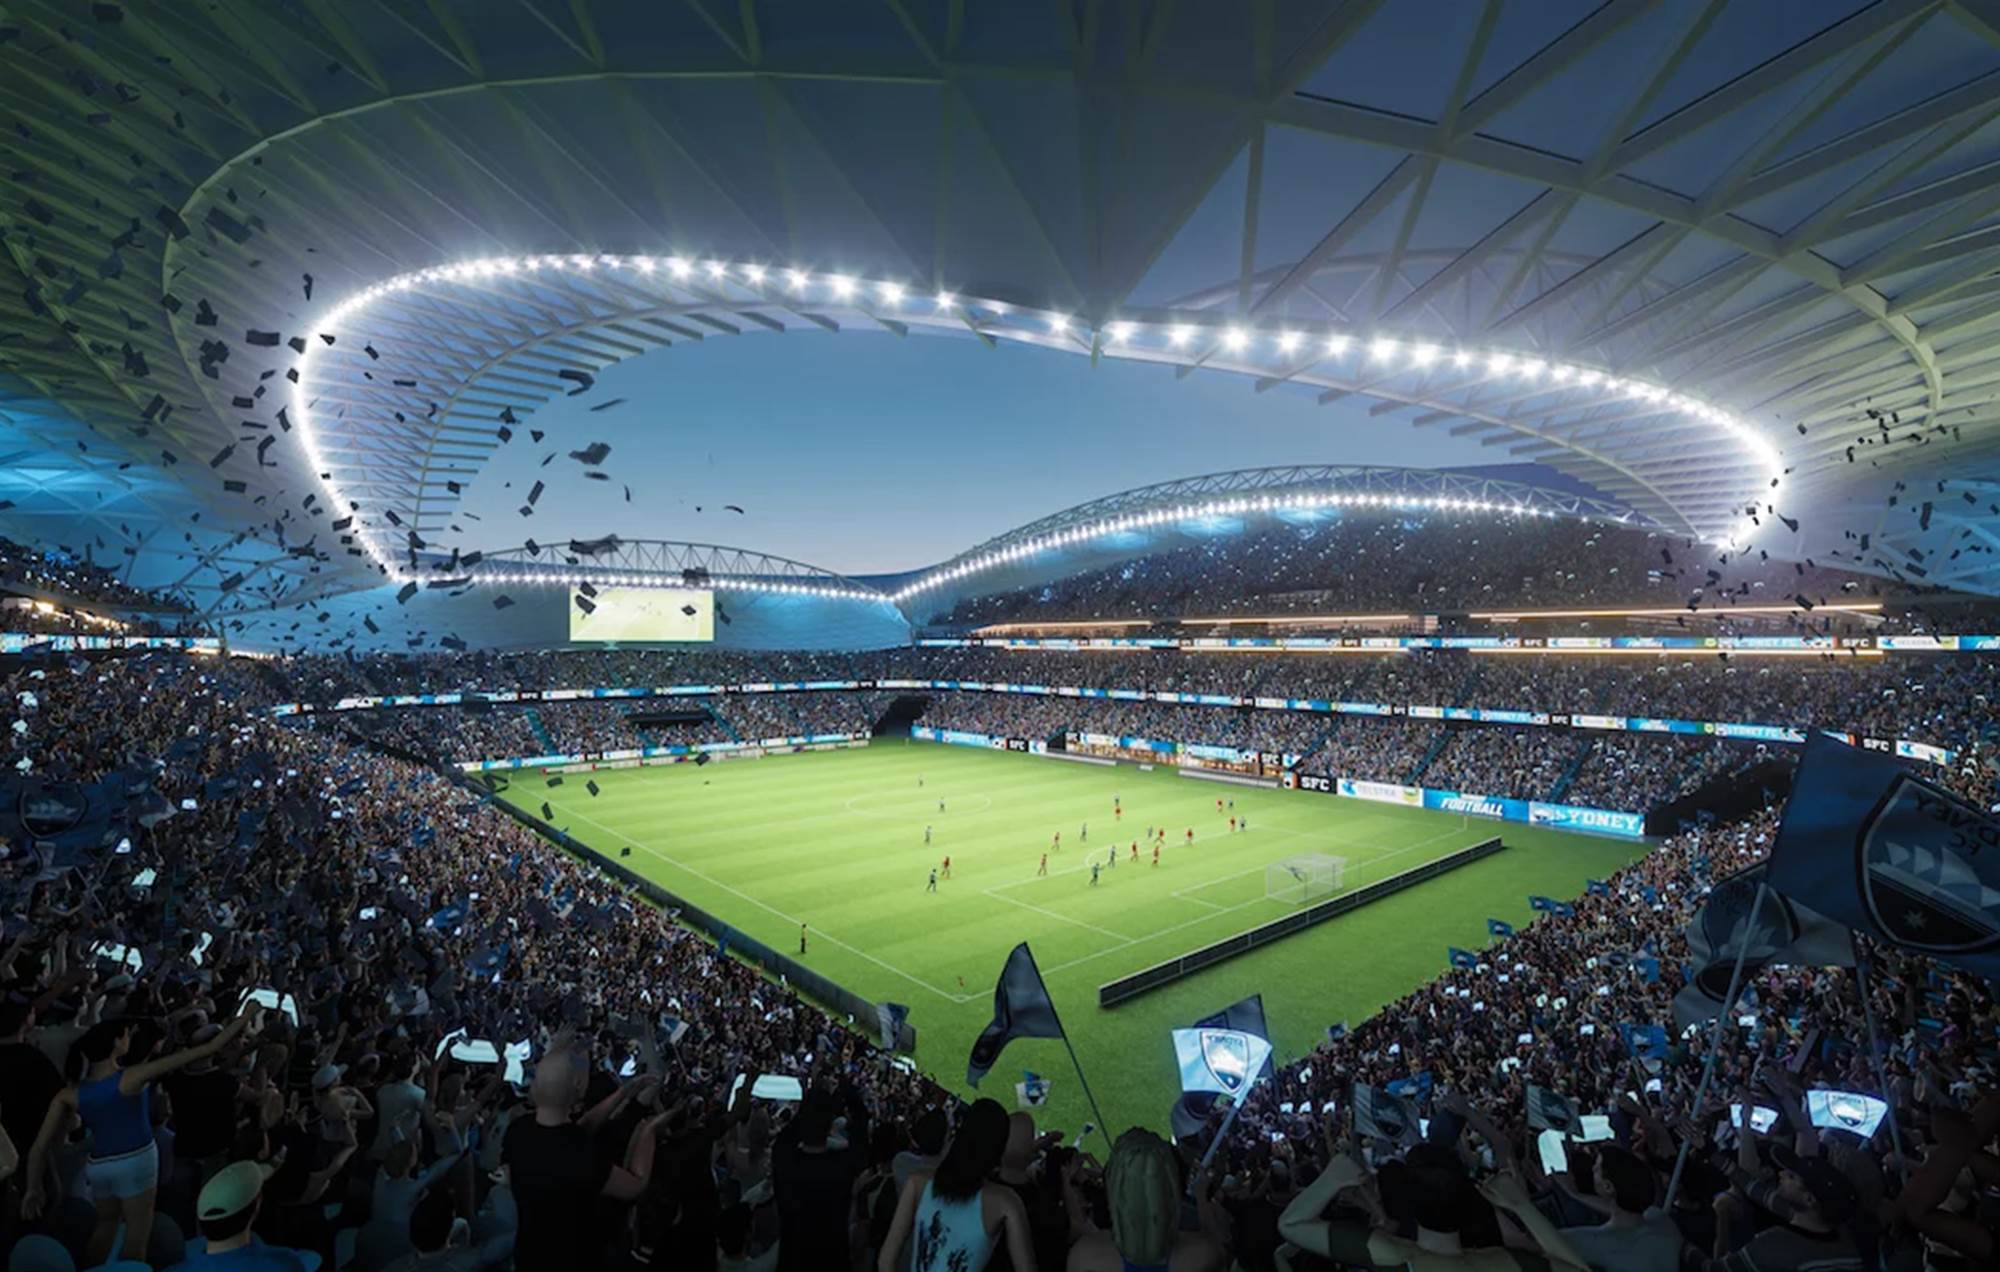 Sydney's new stadium a real crowd pleaser